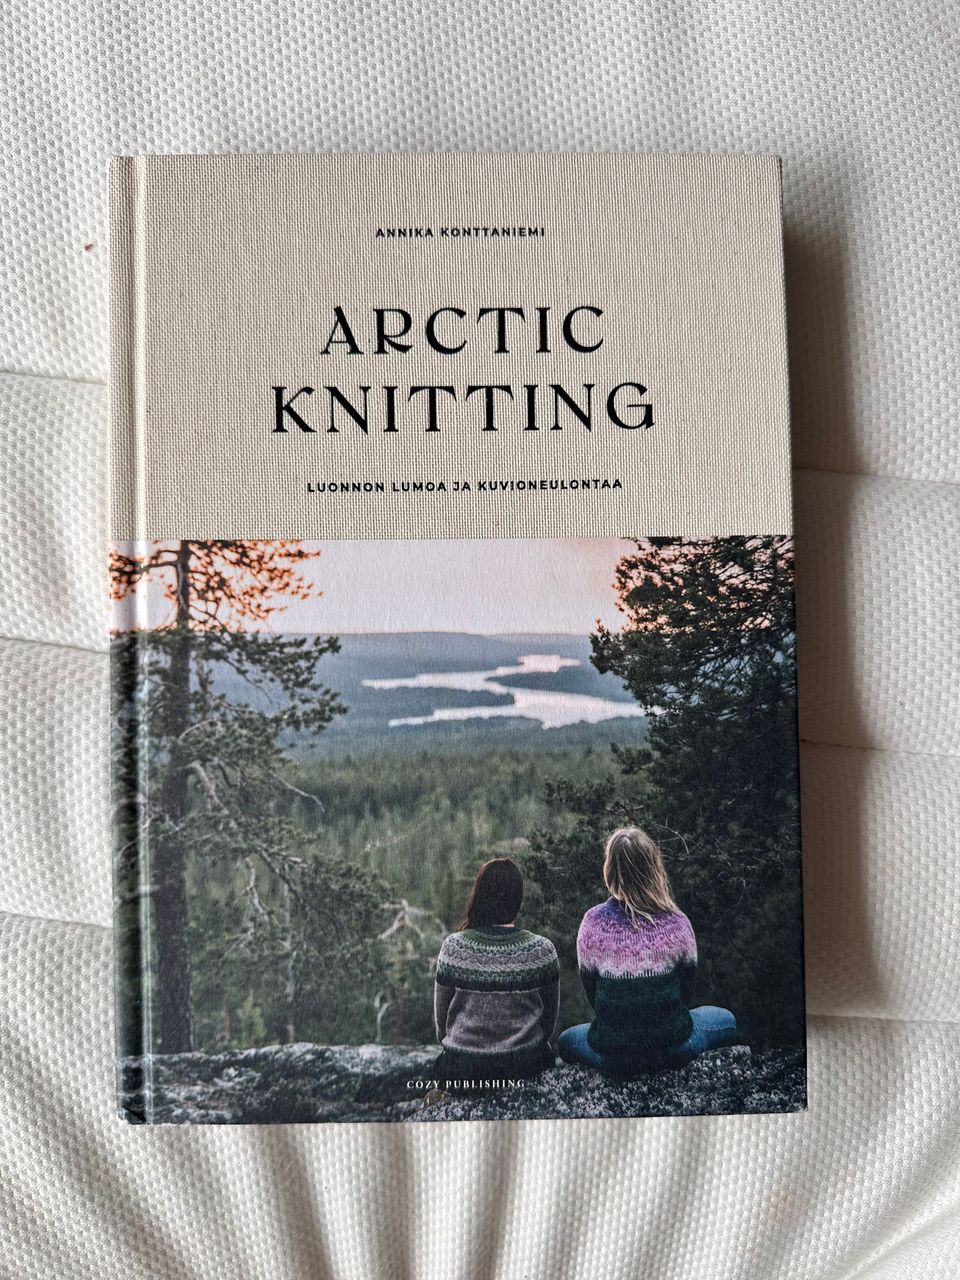 Arctic knitting, kirja